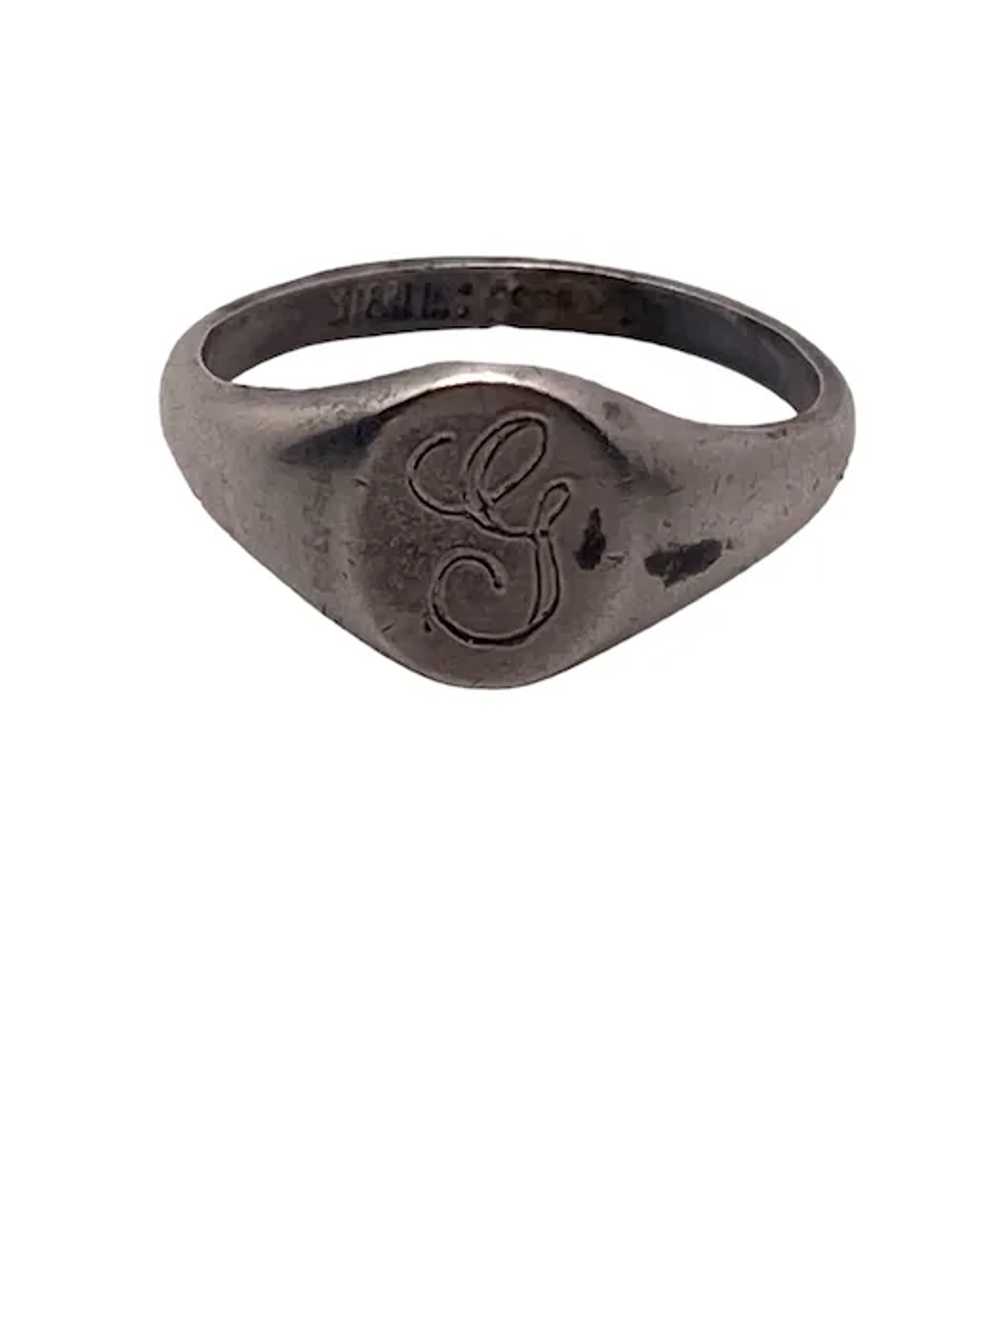 Joseph Esposito Small Sterling Silver Signet Ring - image 2